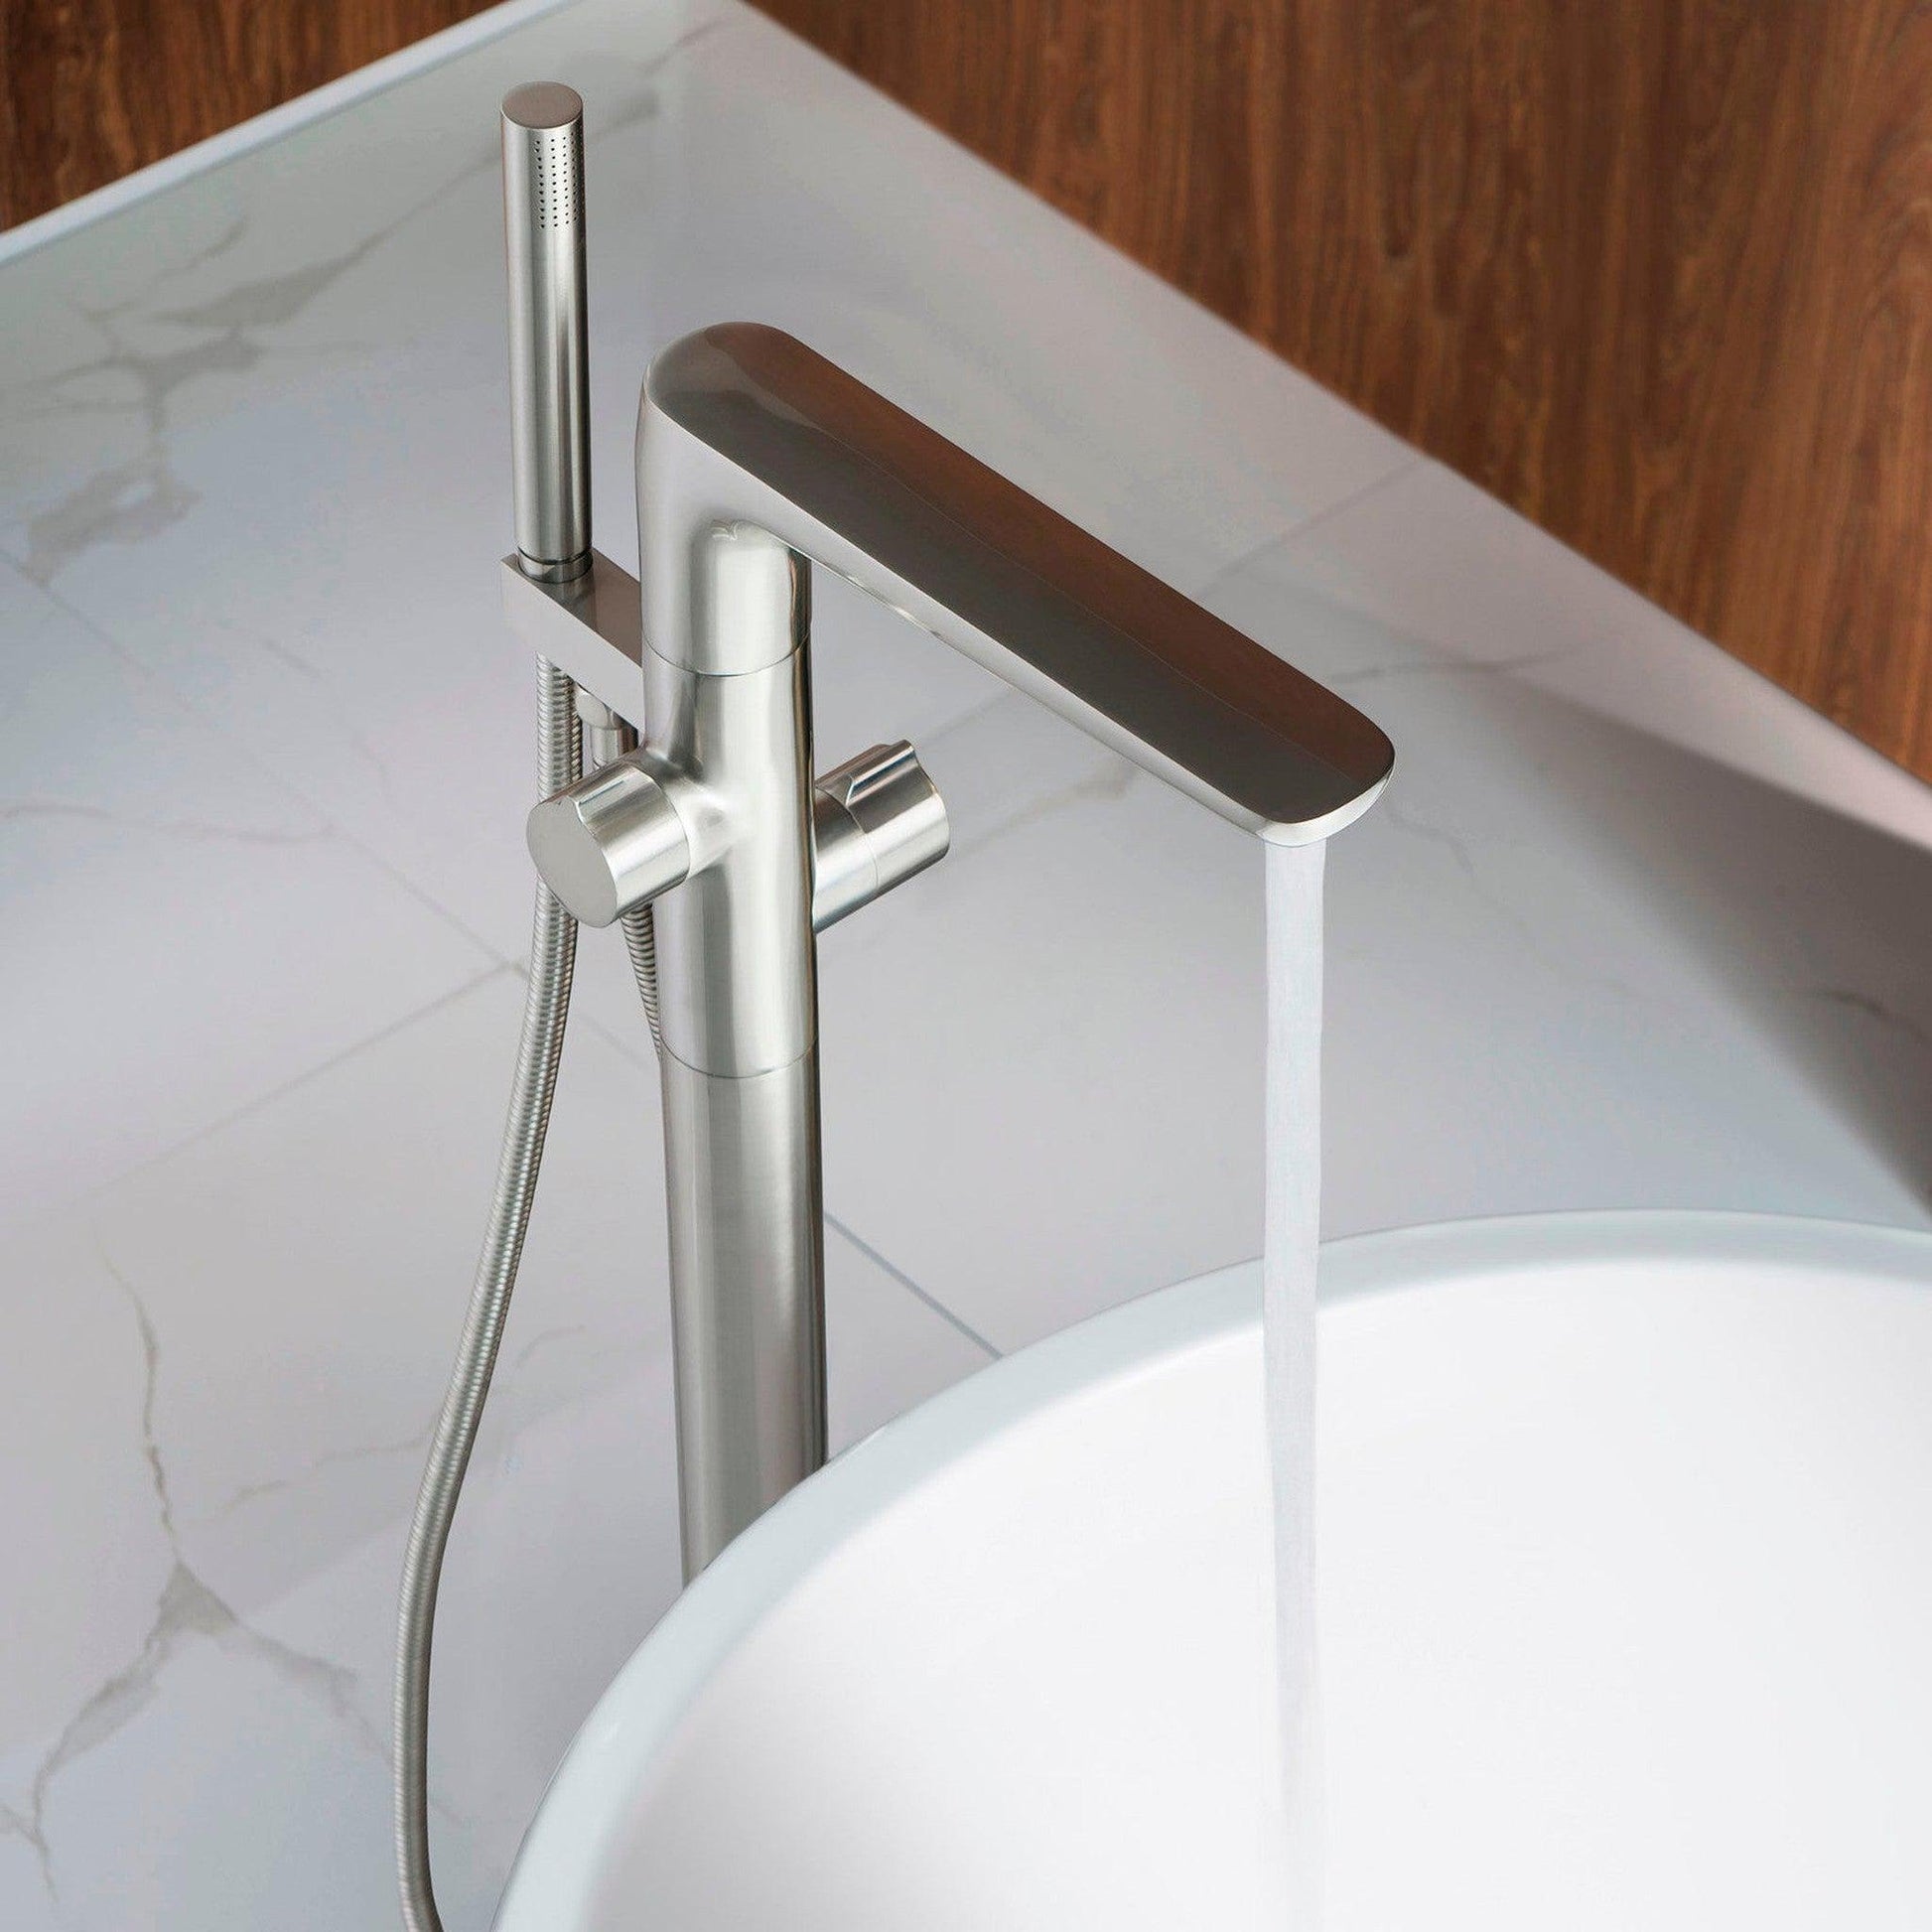 WoodBridge F-0014 Brushed Nickel Contemporary Single Handle Floor Mount Freestanding Tub Filler Faucet With Hand Shower